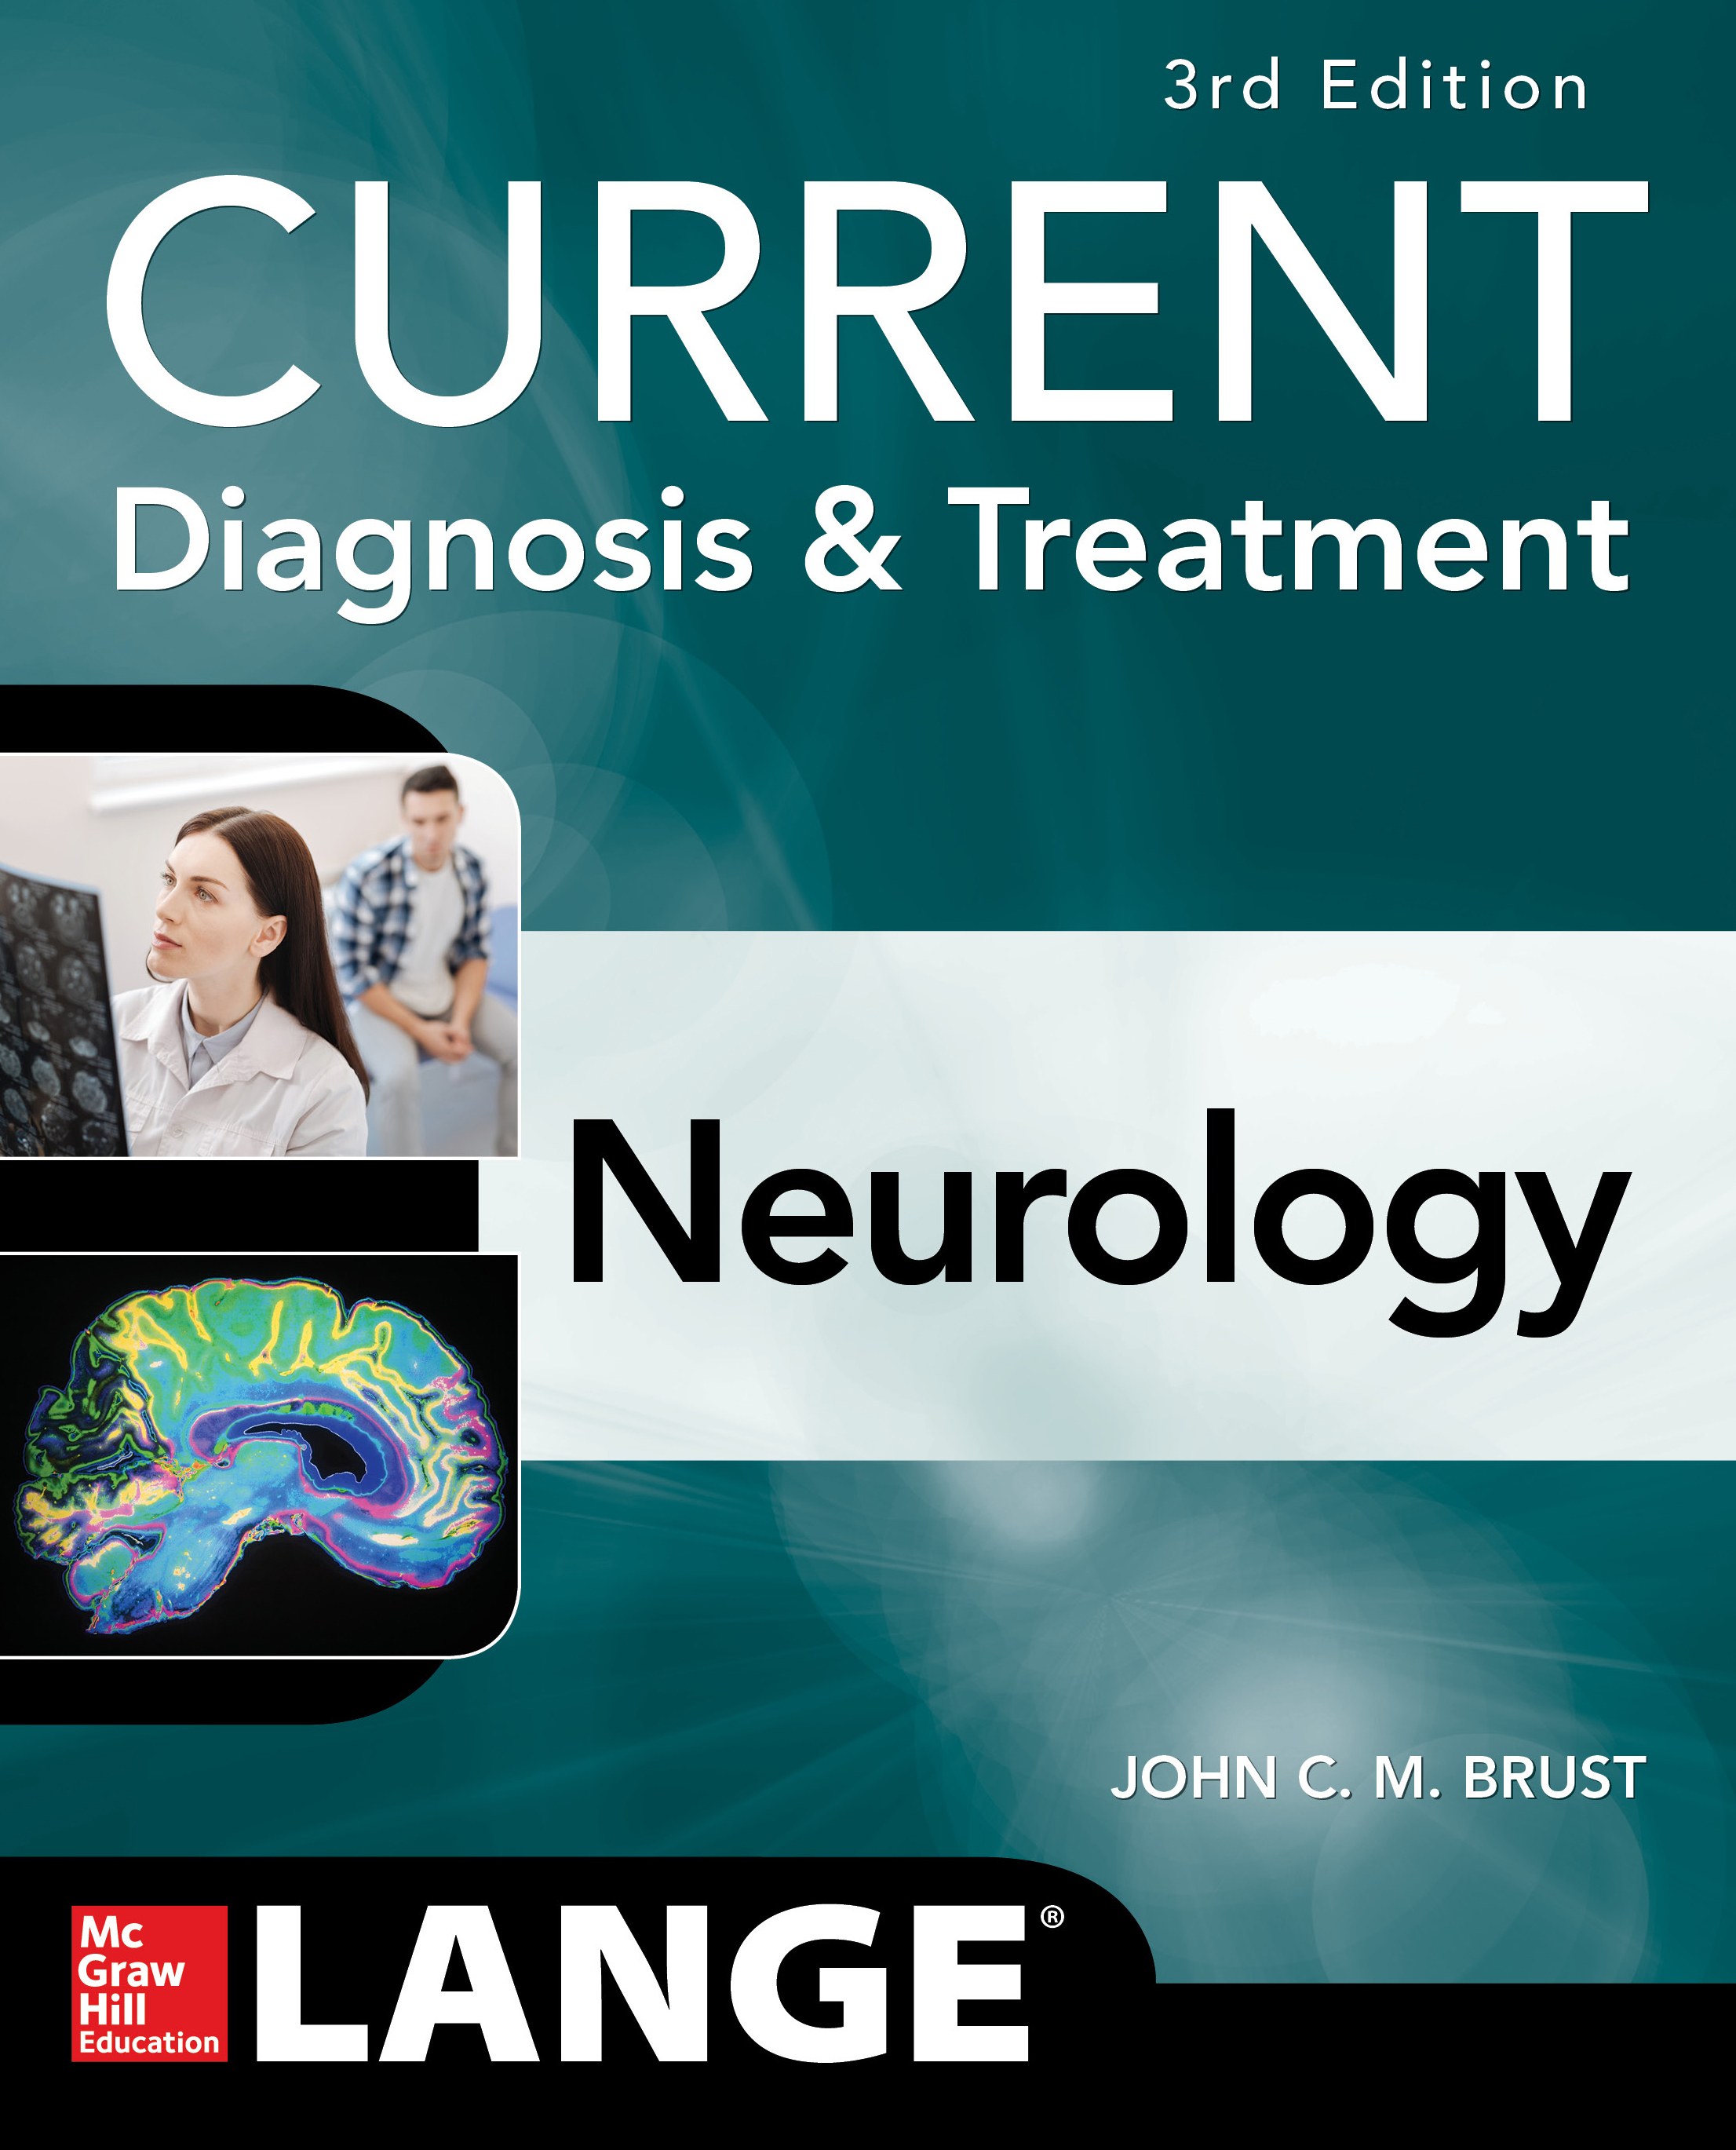 CURRENT Diagnosis & Treatment Neurology, Third Edition